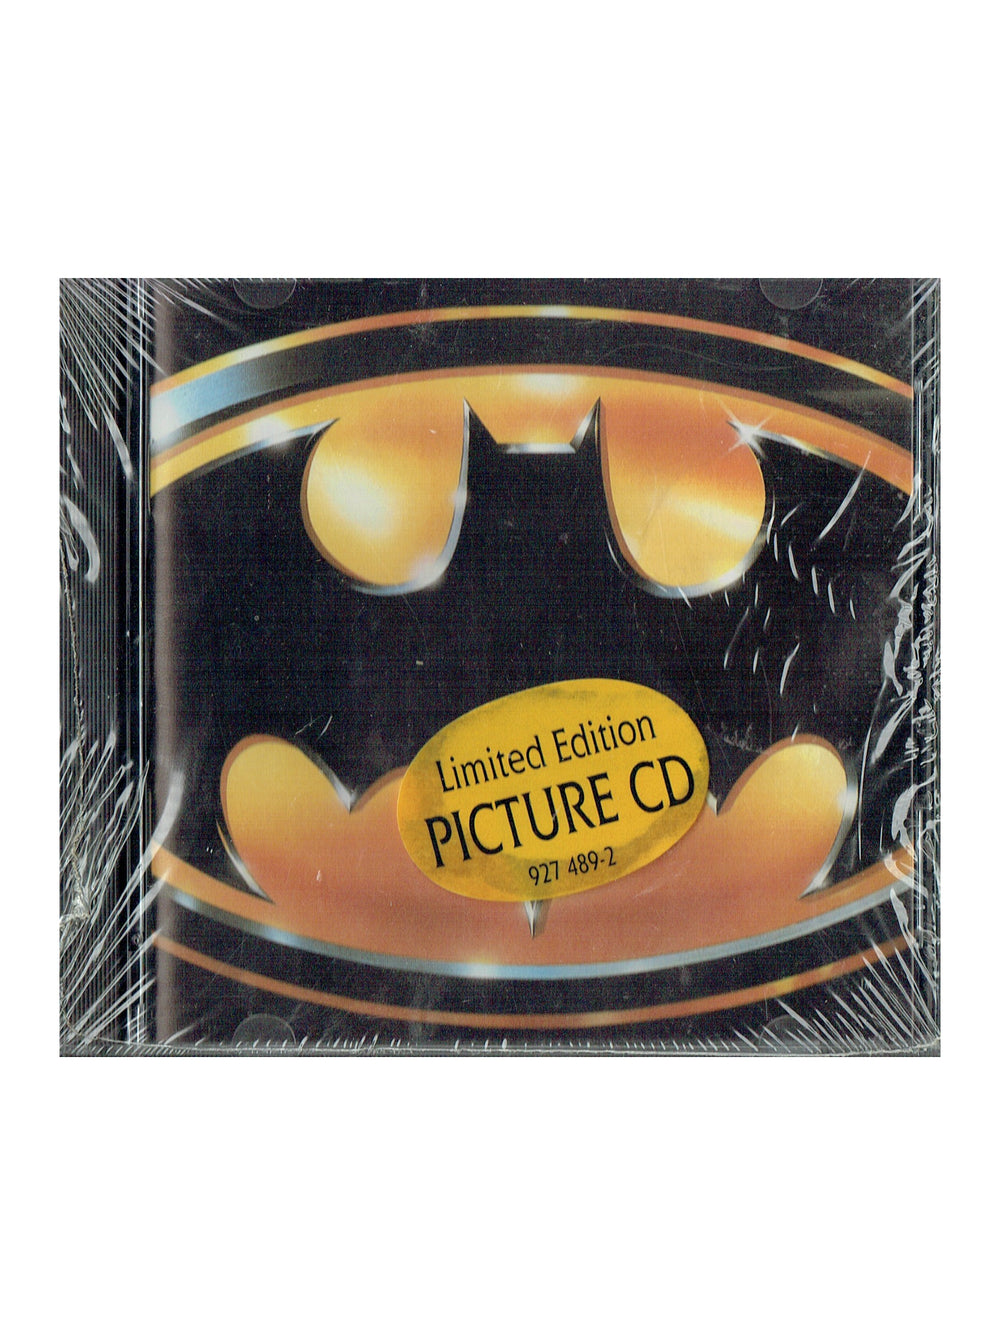 Prince Batman Soundtrack CD Album Picture Disc Release SEALED SMS –  RockItPoole